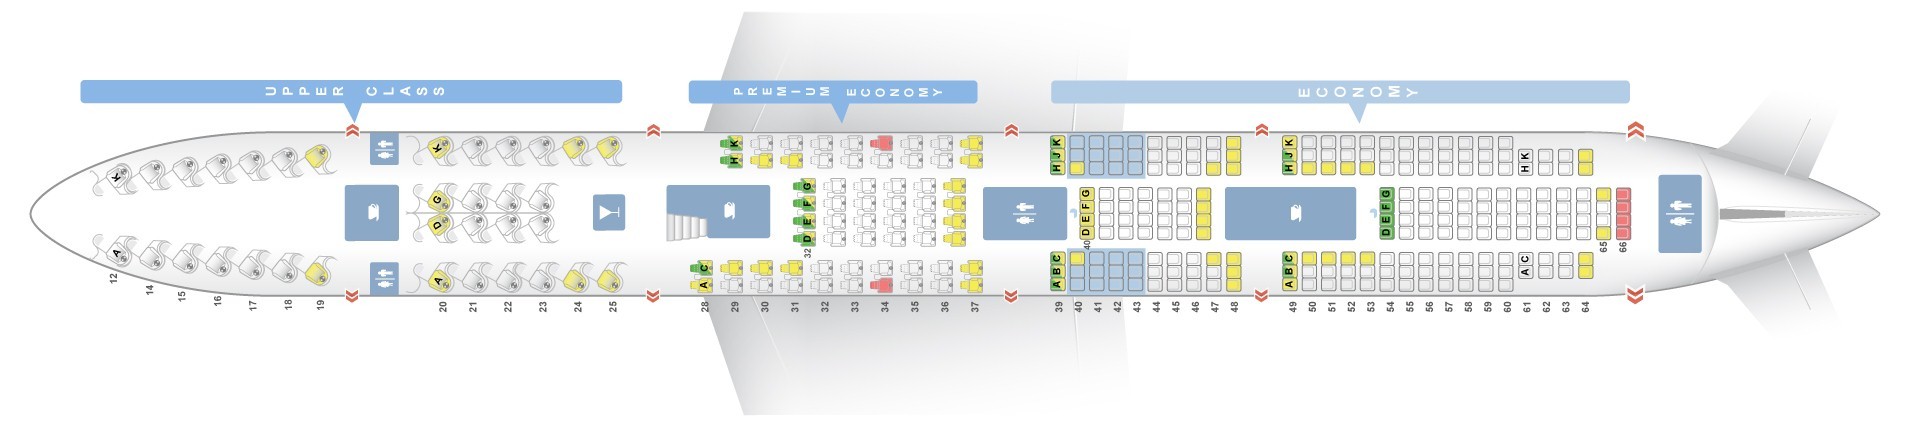 Seat Map Boeing 747 400 Virgin Atlantic Best Seats In Plane